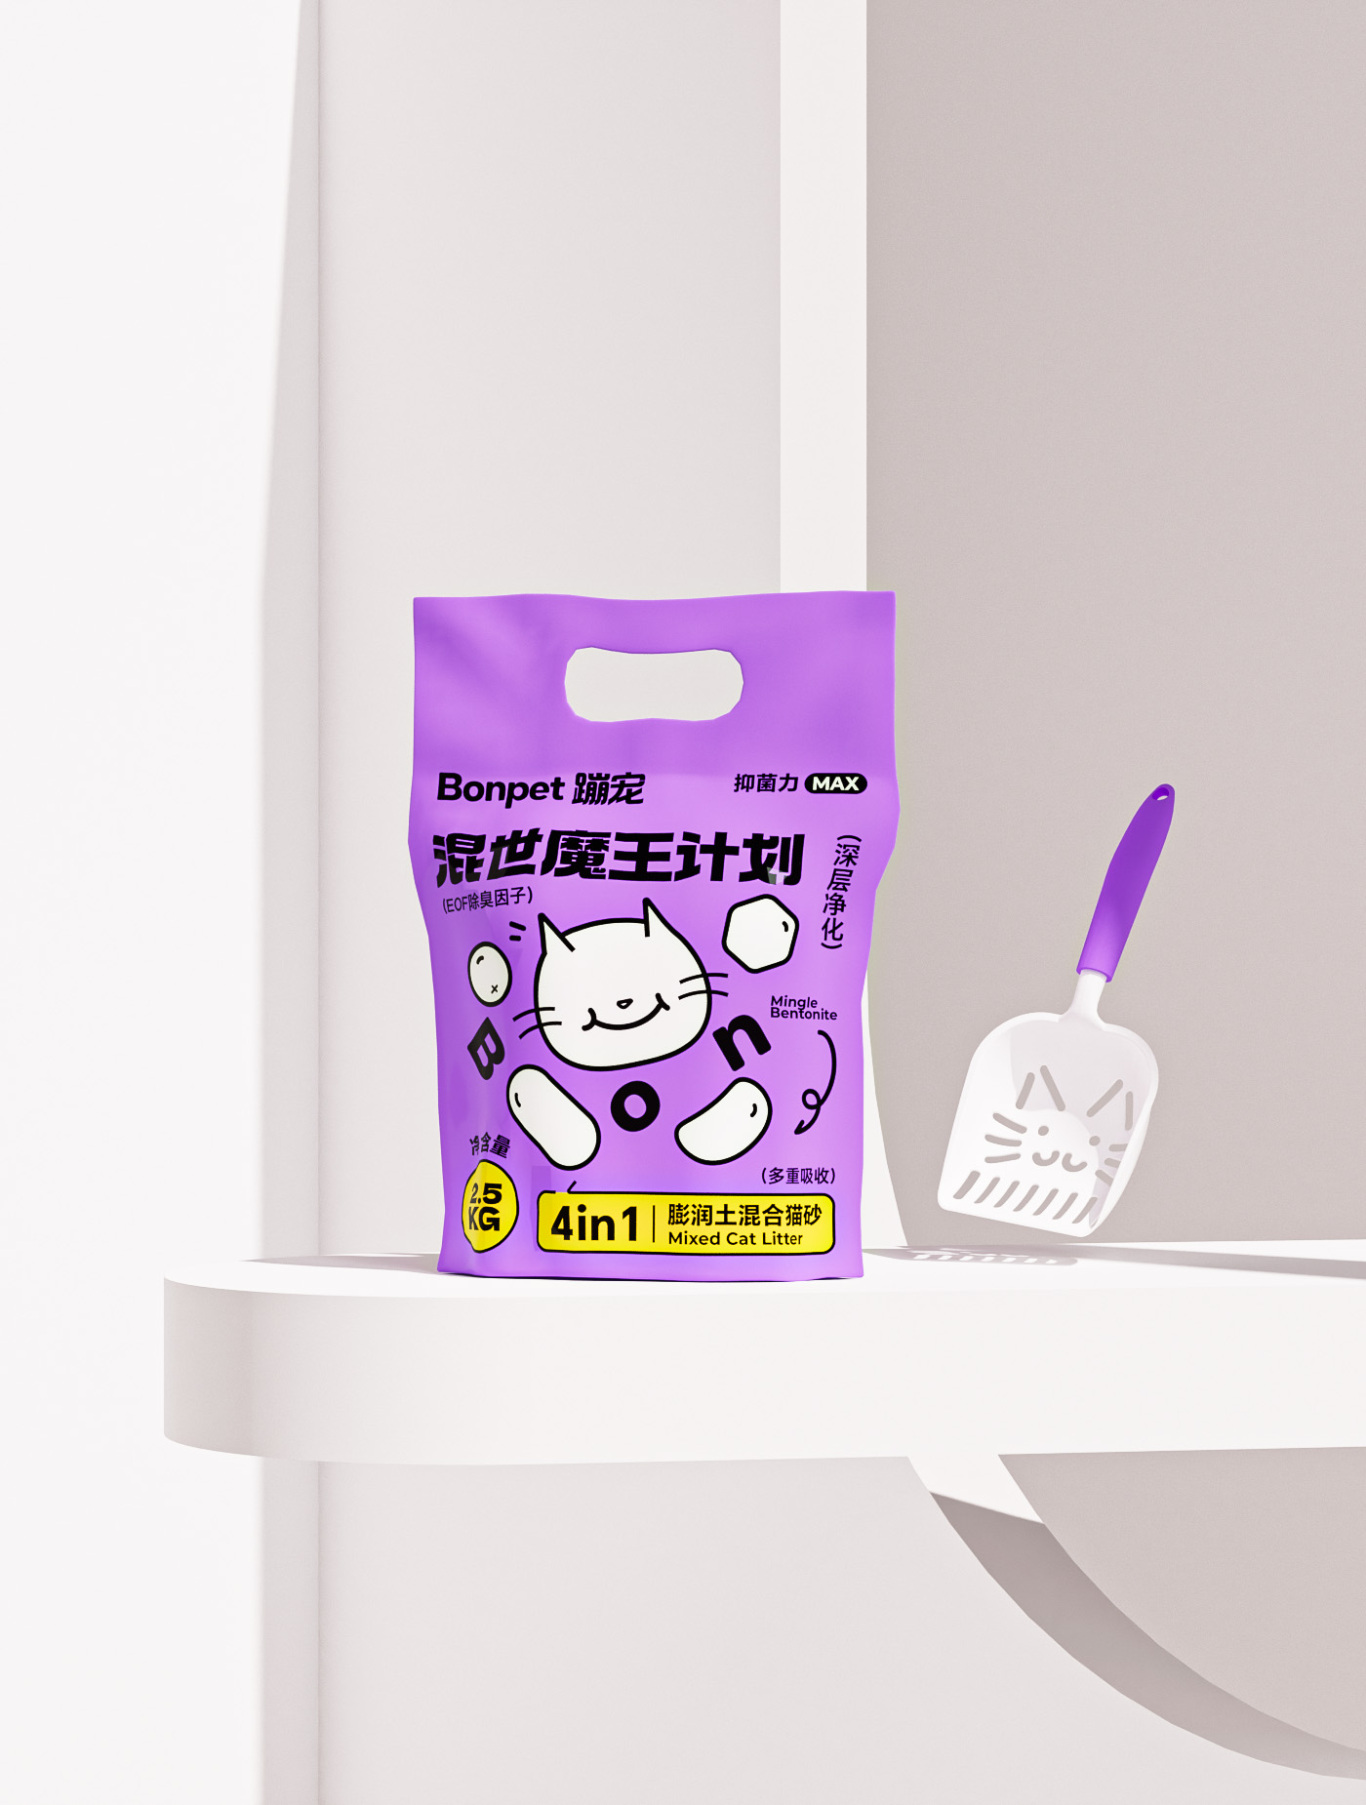 Bonpet X 蹦宠猫砂 C位出道丨趣味猫砂系列包装设计图12